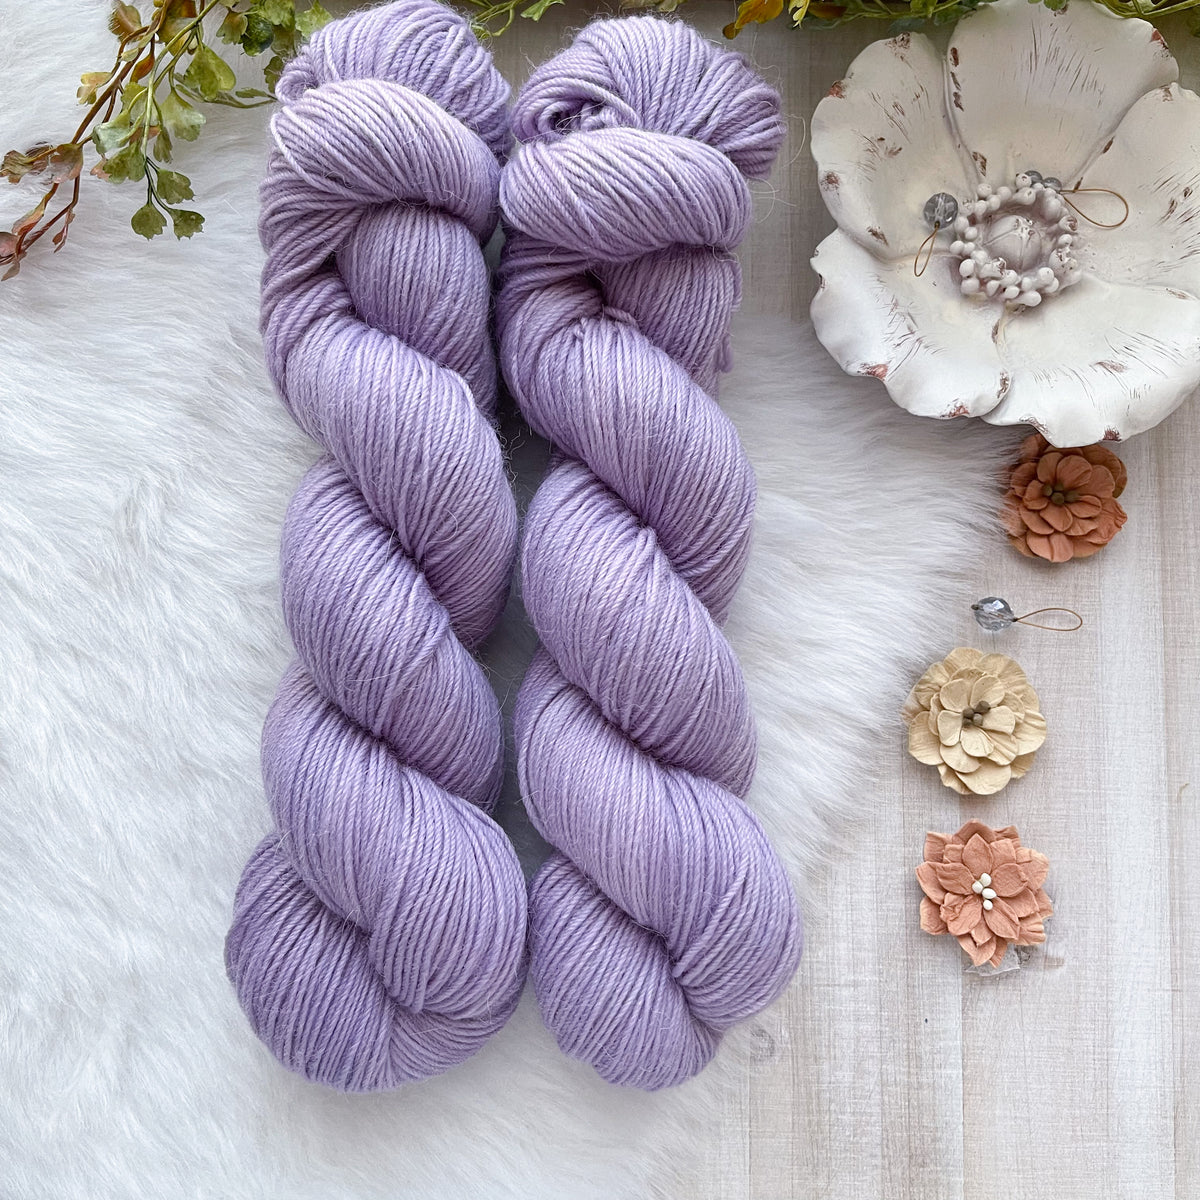 Merino Cashmere Silk lace weight yarn – Mindful Yarns